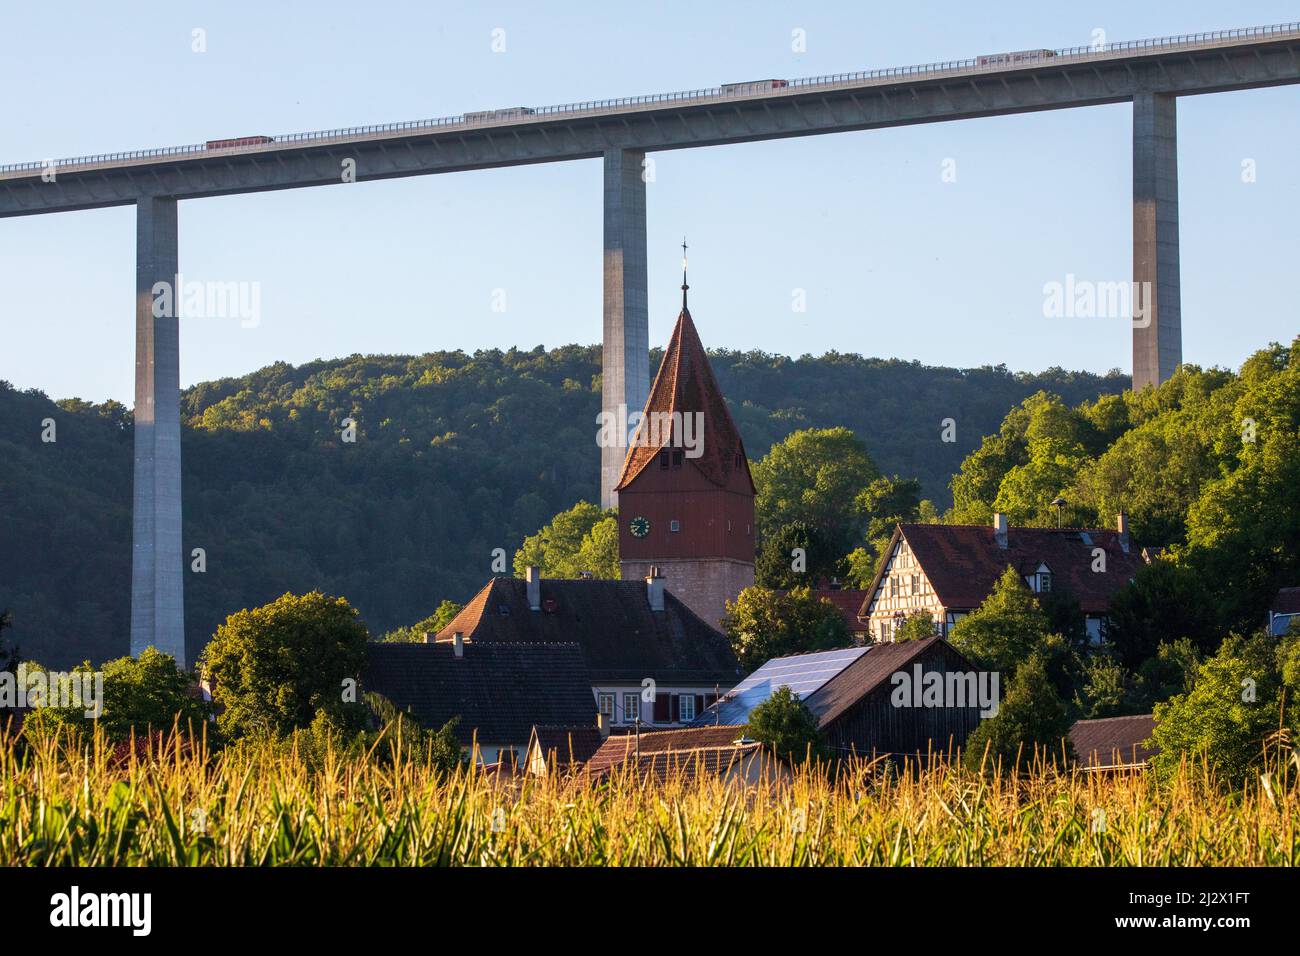 Kochertalbrücke, A6, highest motorway bridge in Germany, crosses the Kocher near Geislingen, German motorway, Stock Photo